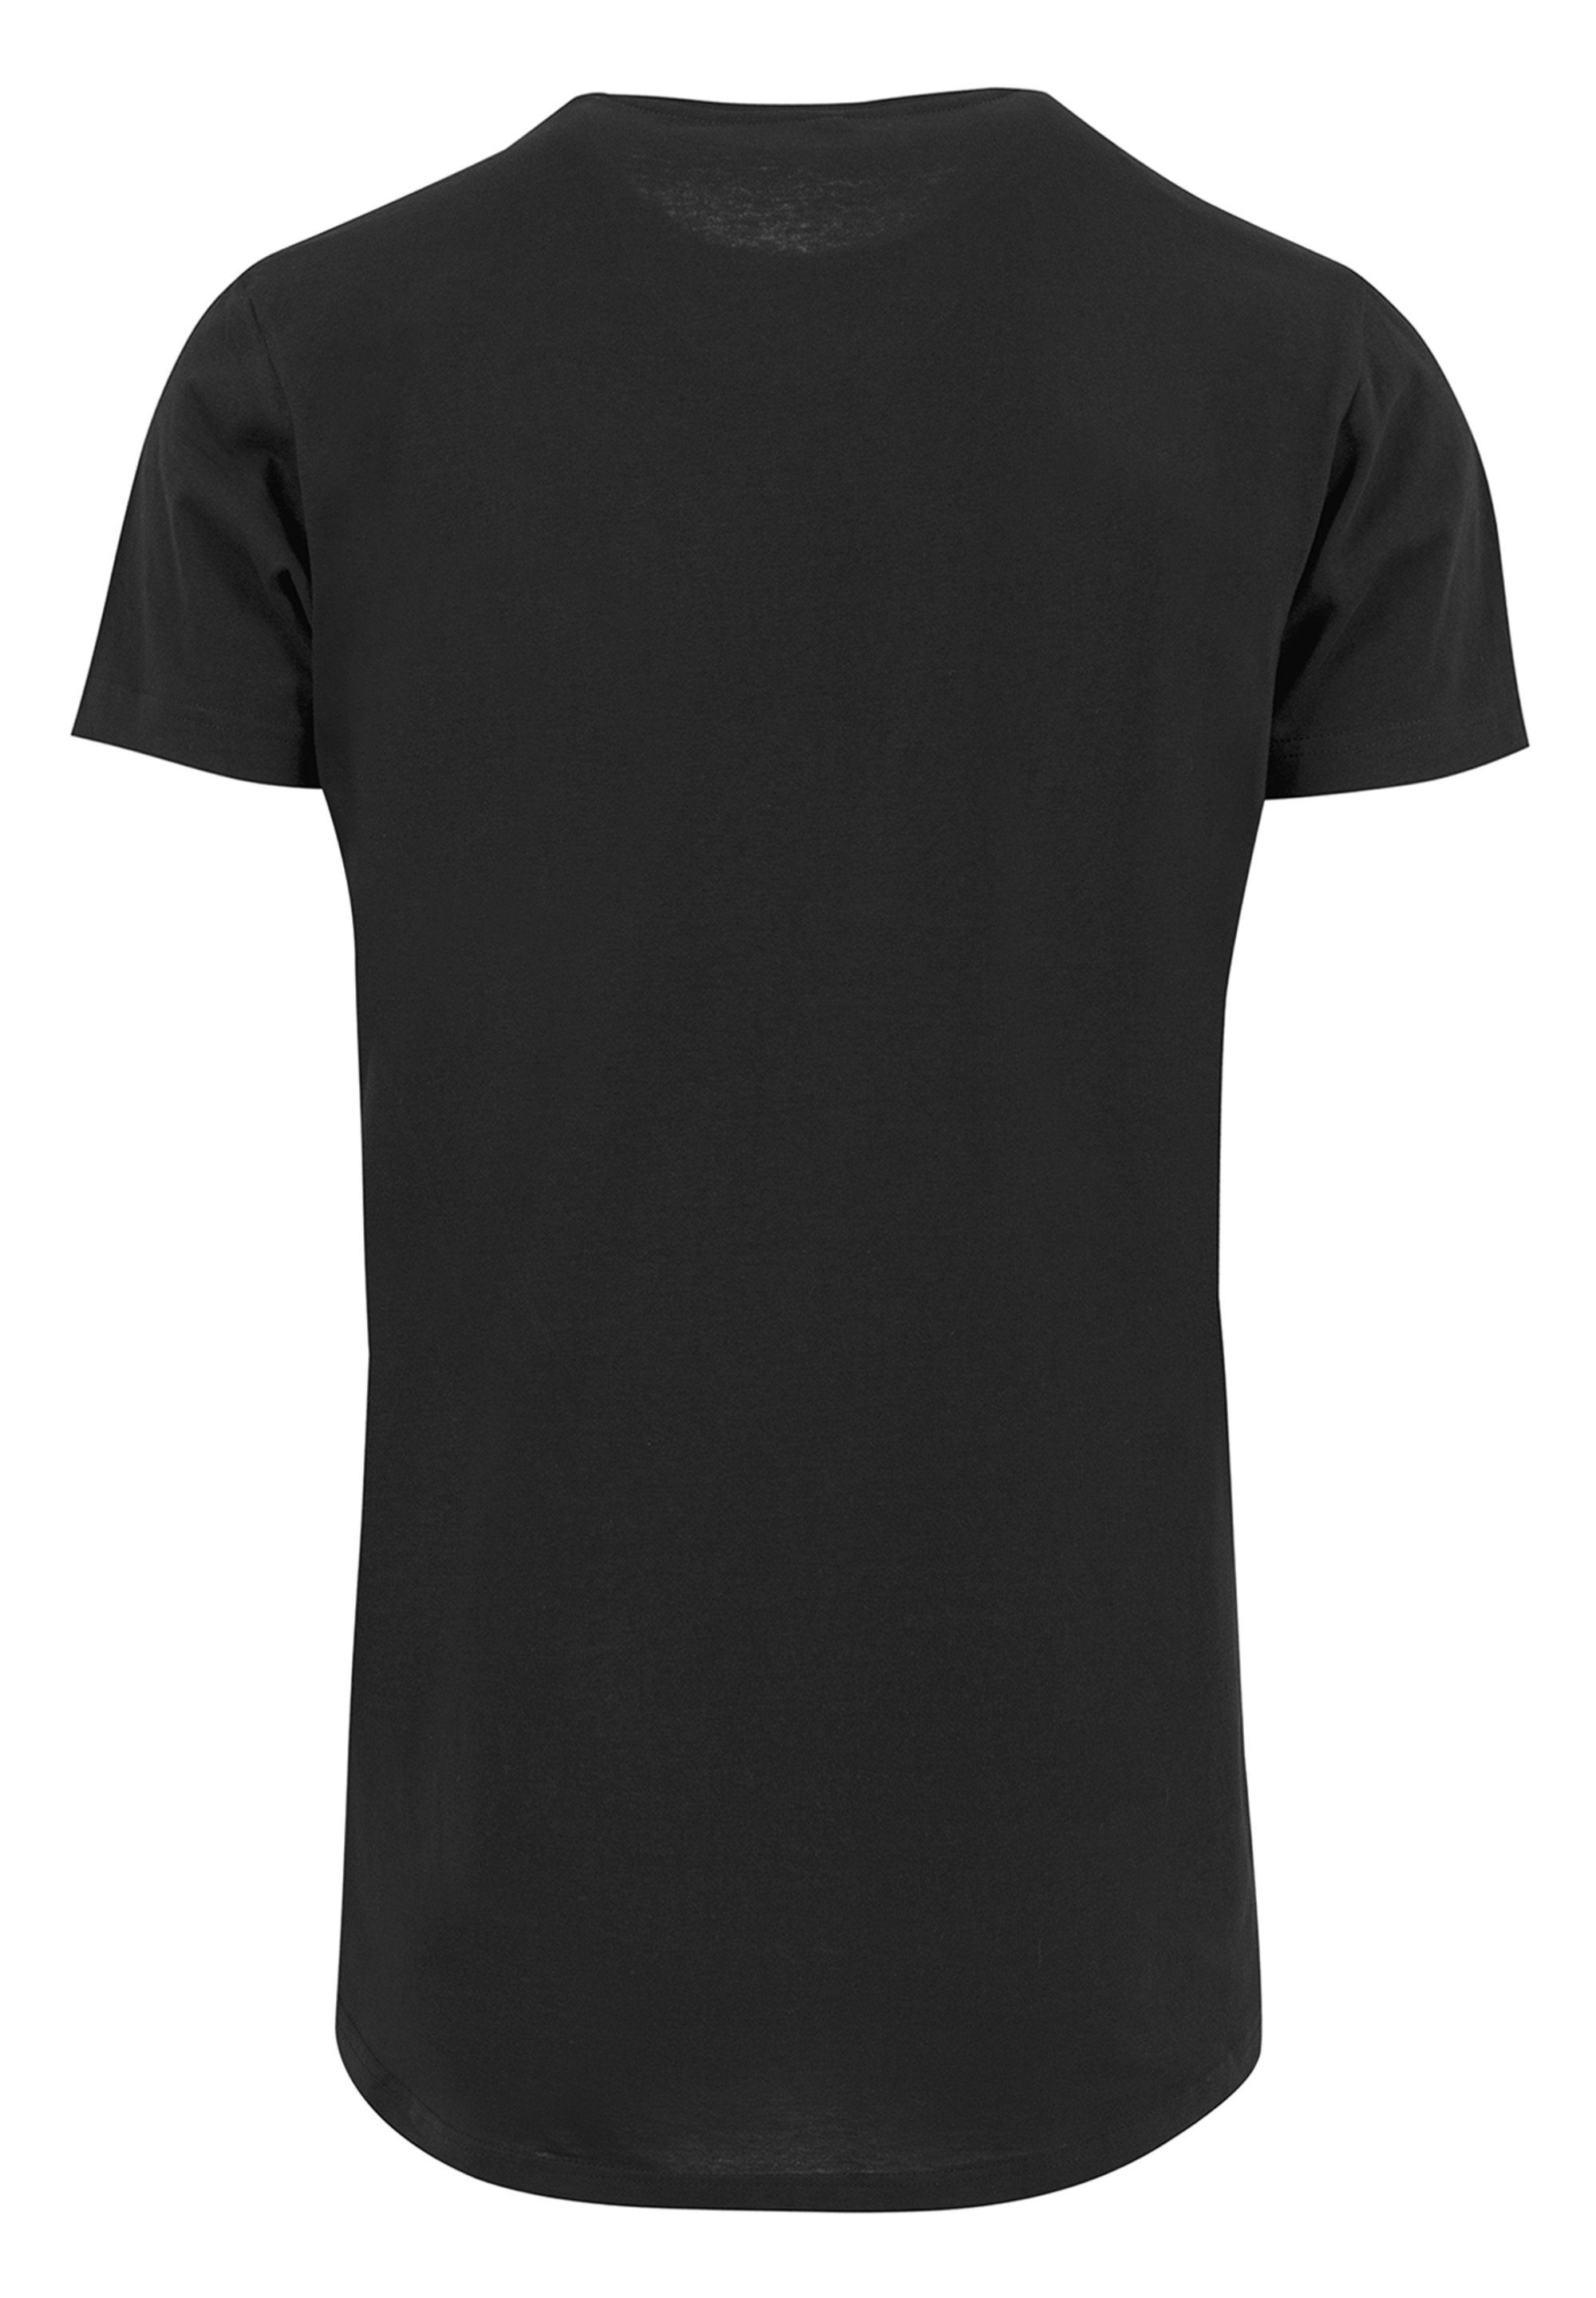 Queen Black F4NT4STIC Classic schwarz Rockband Print Crest T-Shirt